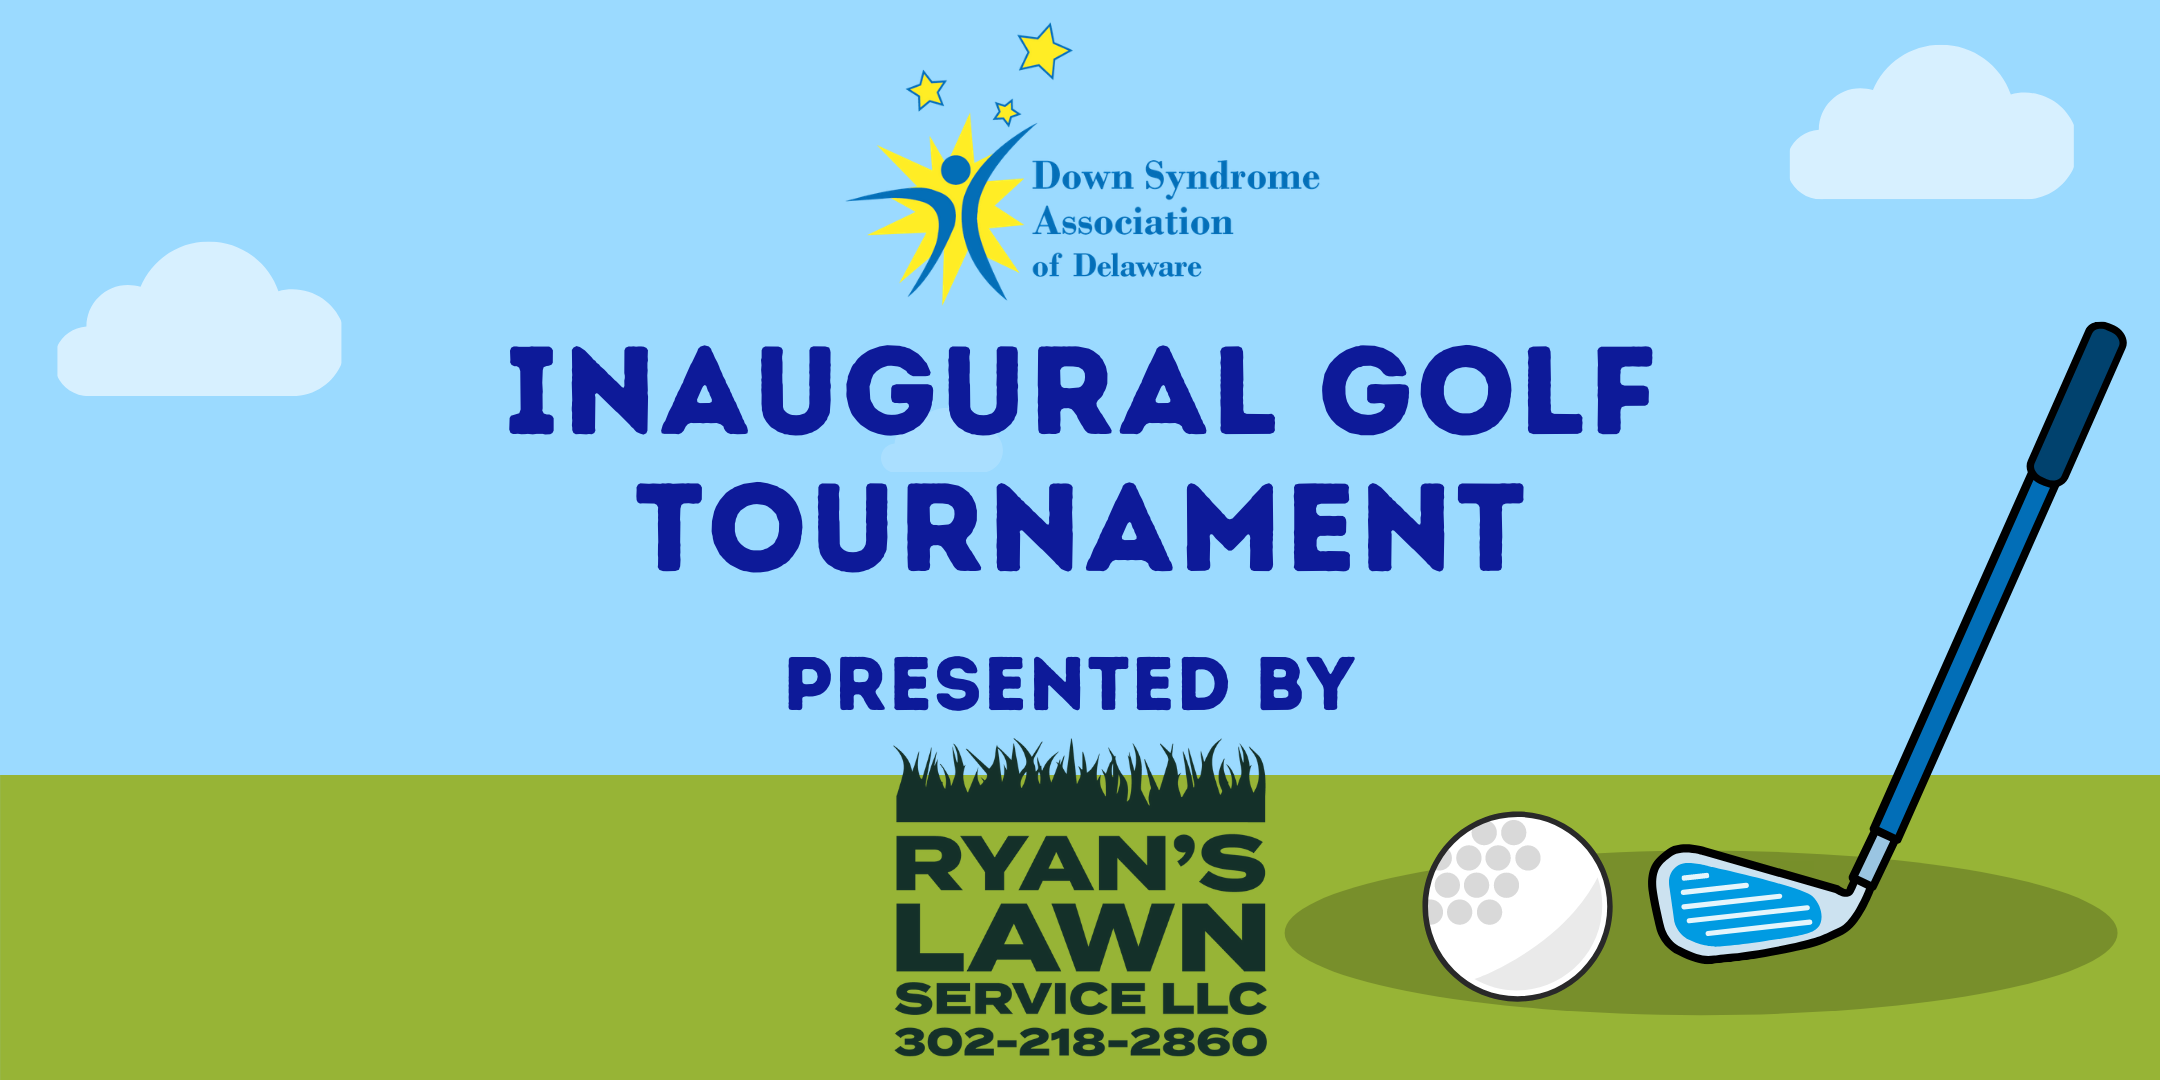 Inaugural Golf Tournament Presented by Ryan's Lawn Service LLC